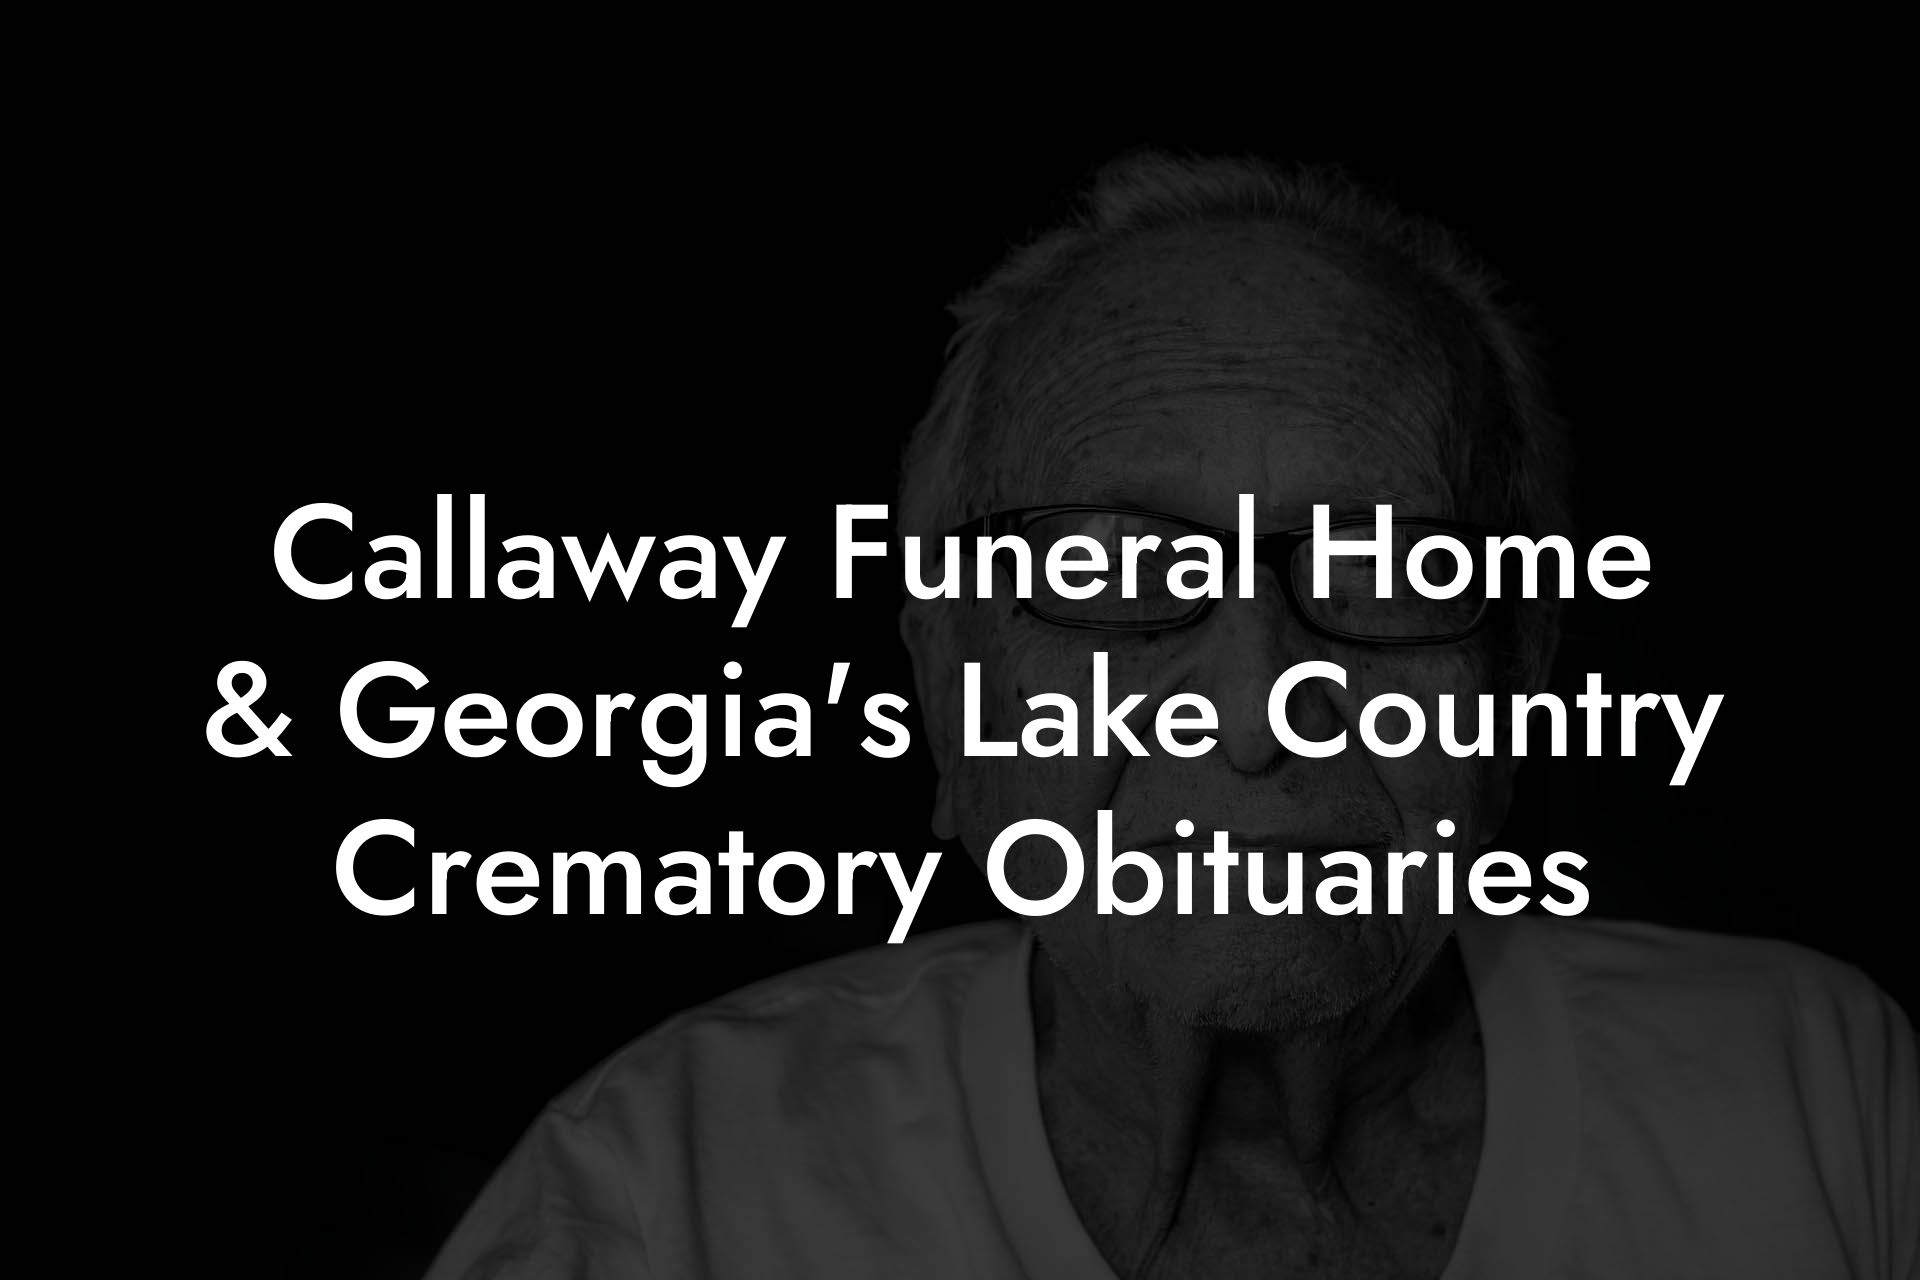 Callaway Funeral Home & Georgia's Lake Country Crematory Obituaries